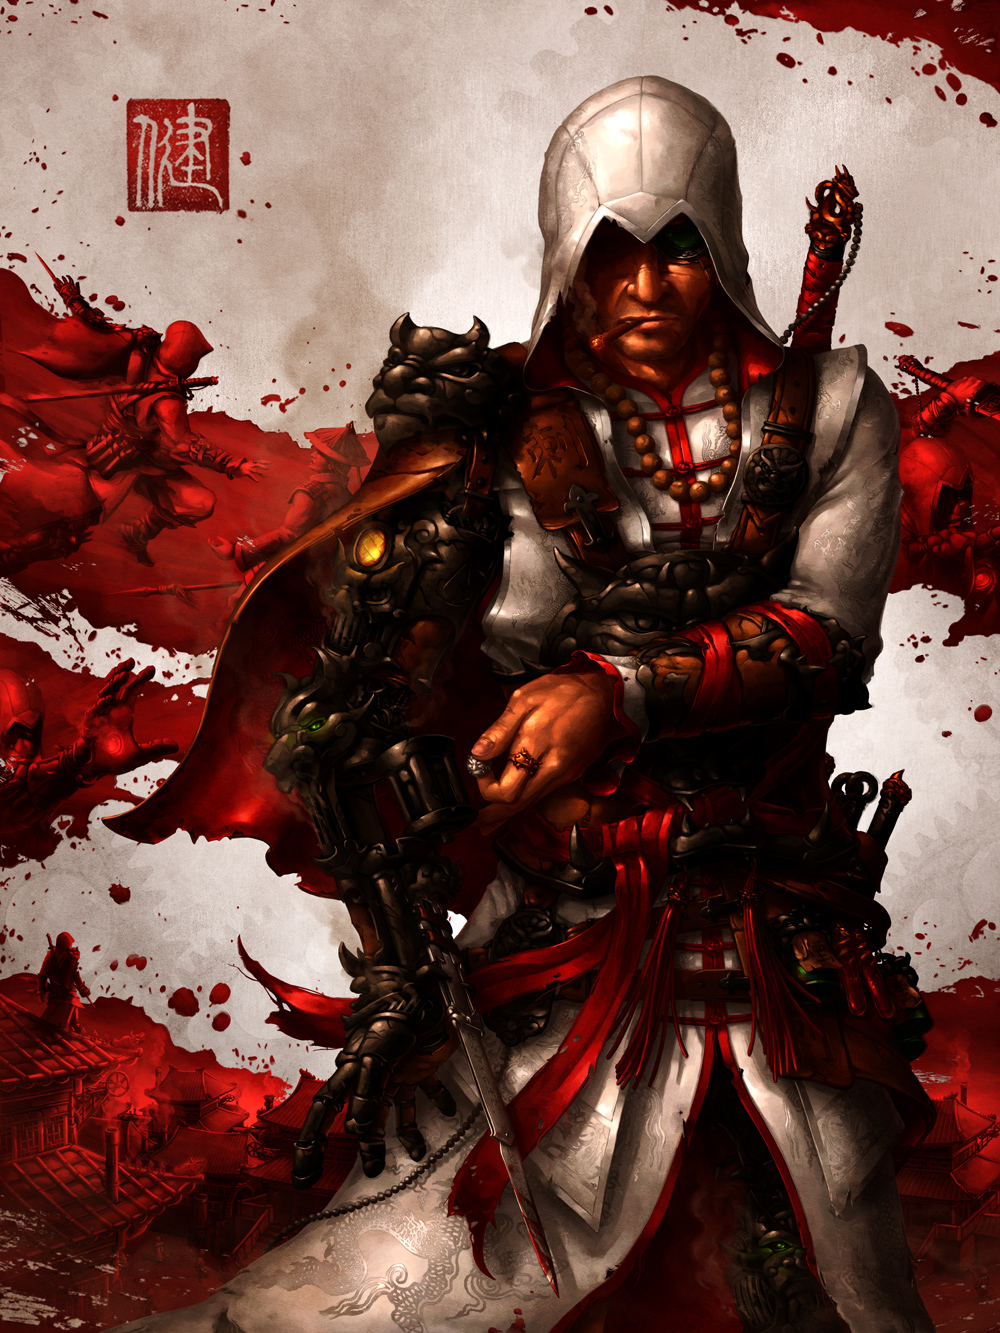 Ассасин крид арт. Ассасин Крид Ронин. Assassins Creed Art. Японский ассасин Крид. Ассасин боец.